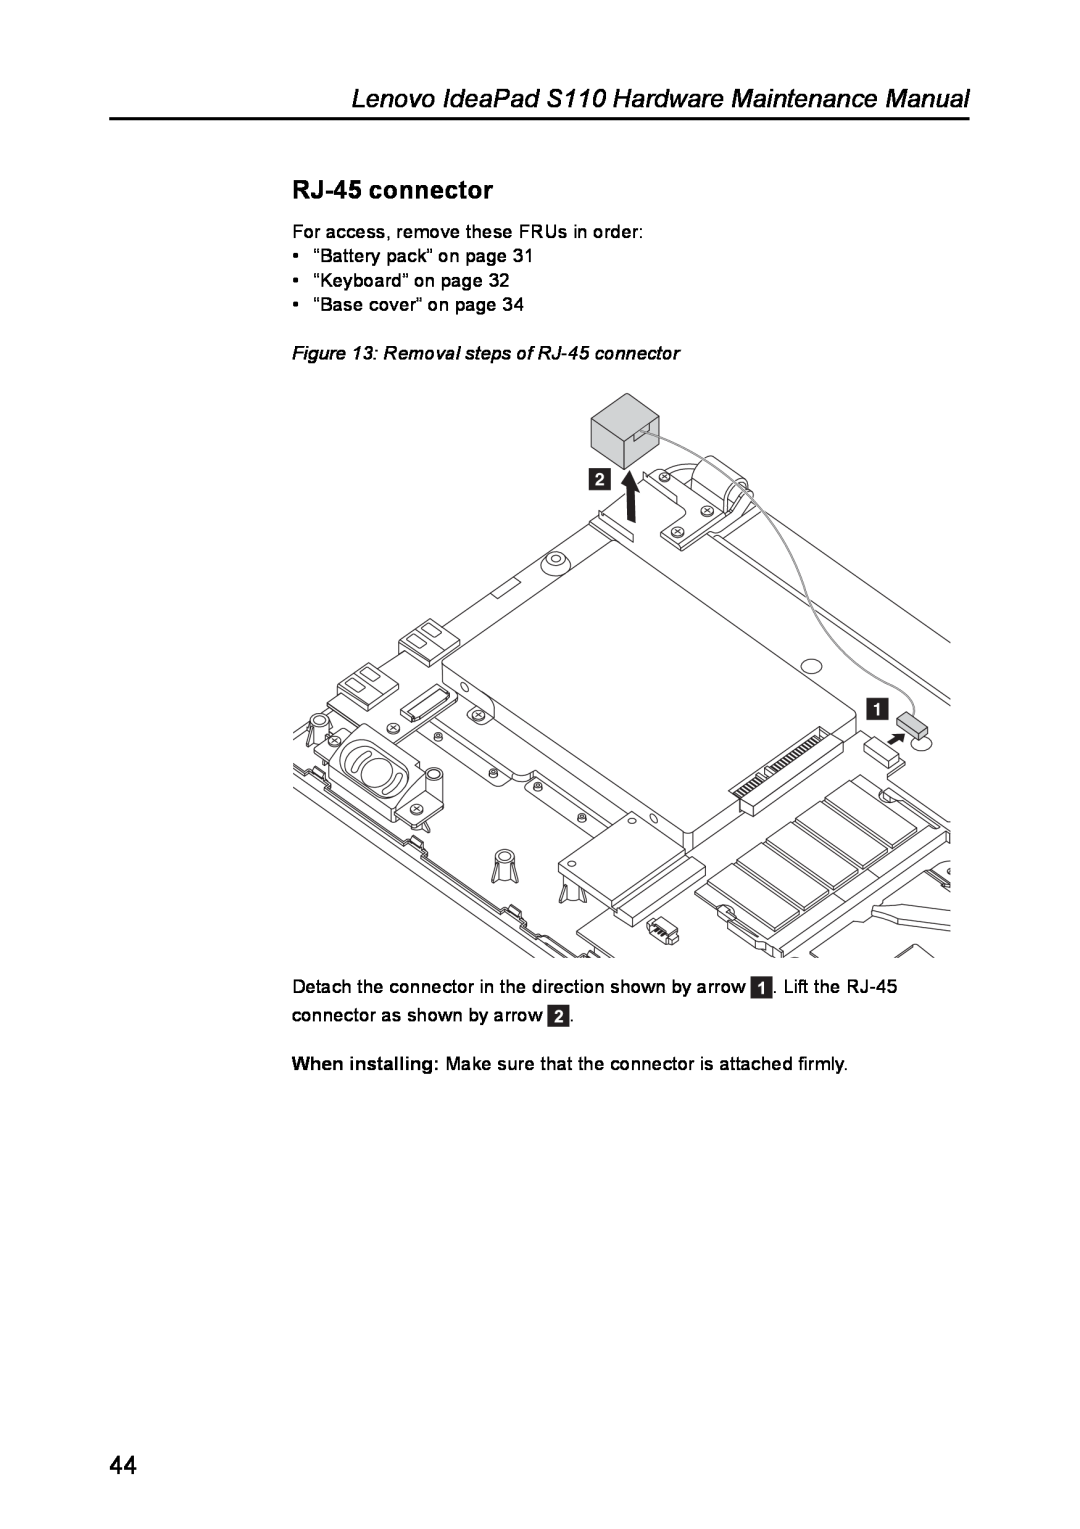 Lenovo manual Removal steps of RJ-45 connector, Lenovo IdeaPad S110 Hardware Maintenance Manual 